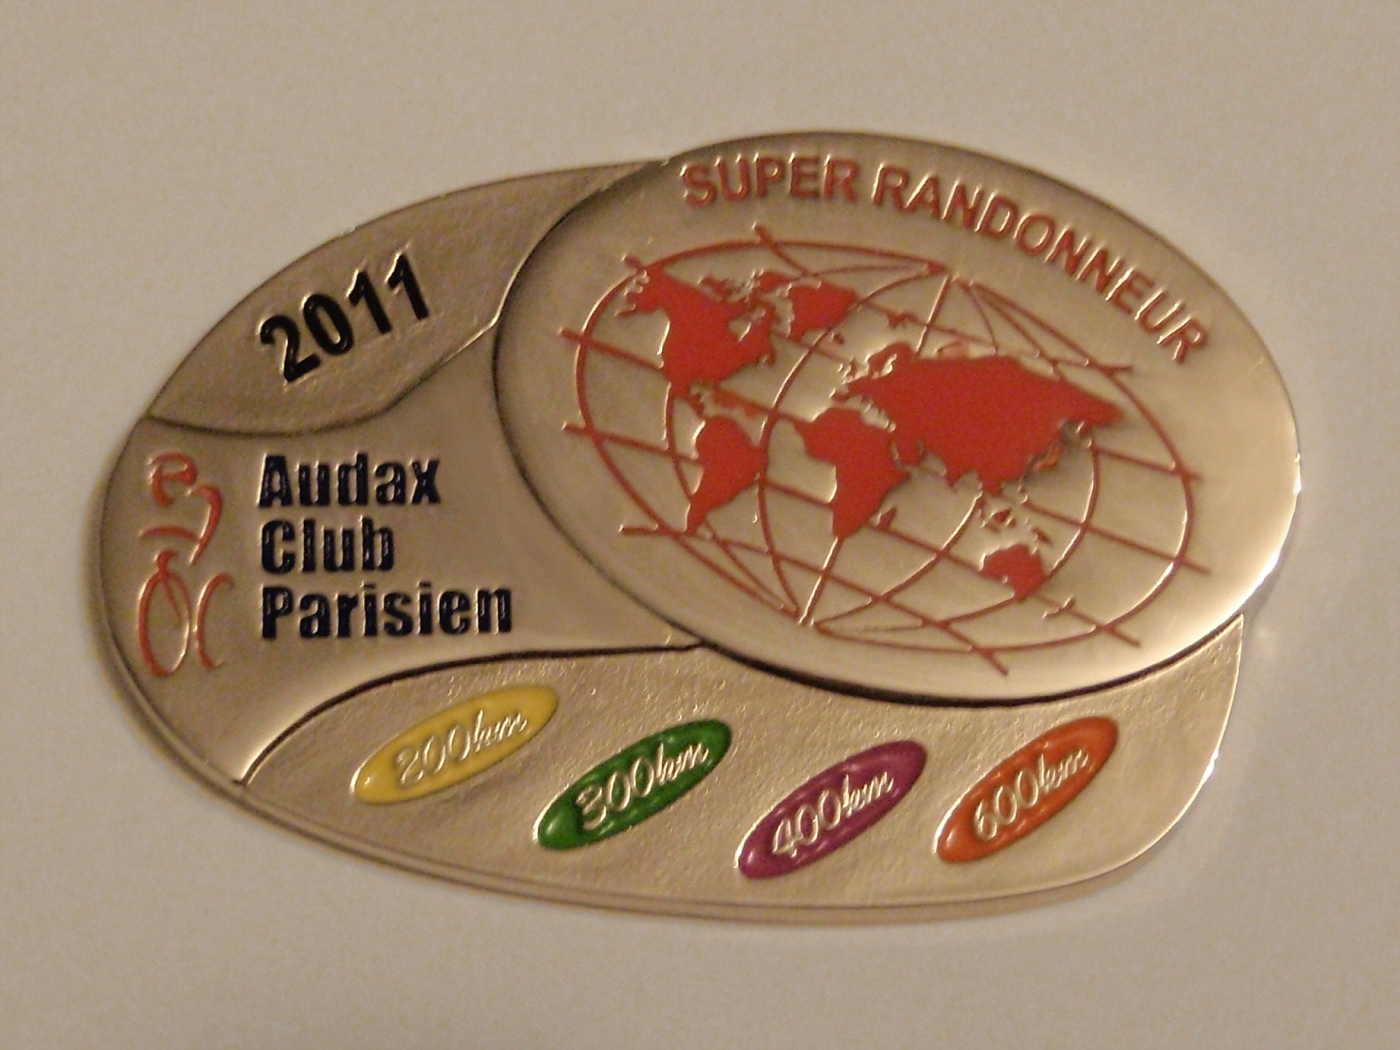 Super Randonneur Medaille 2011